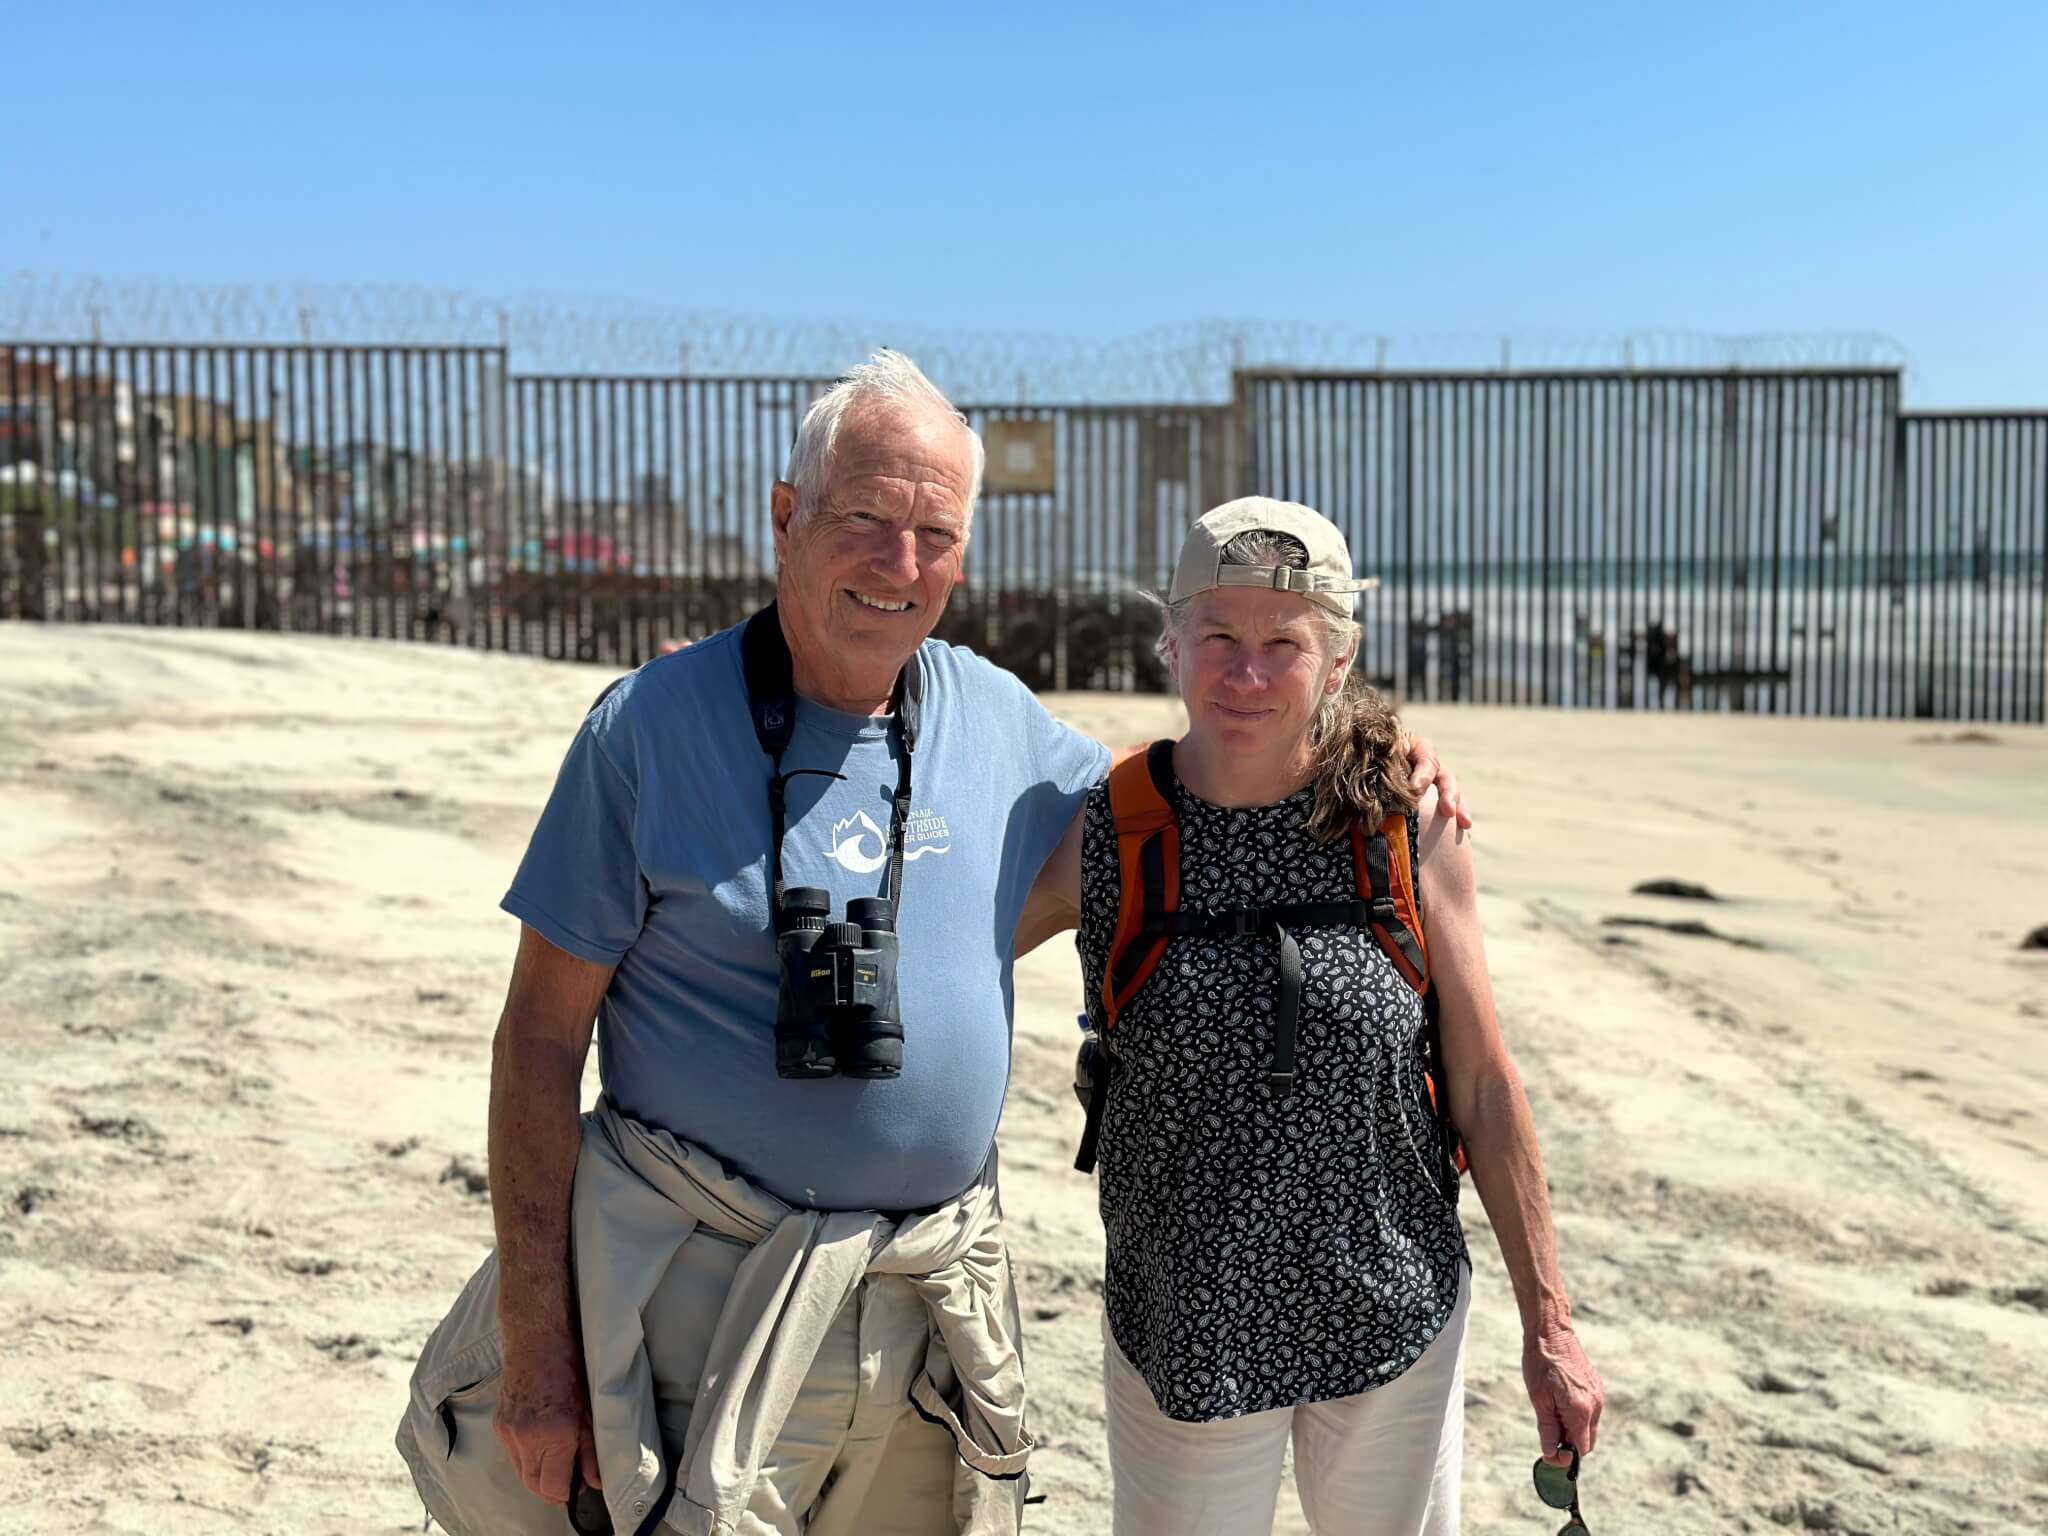 Nina Douglass與丈夫Jeff為了在邊境協助移民，四年前從波士頓搬 到聖地牙哥。